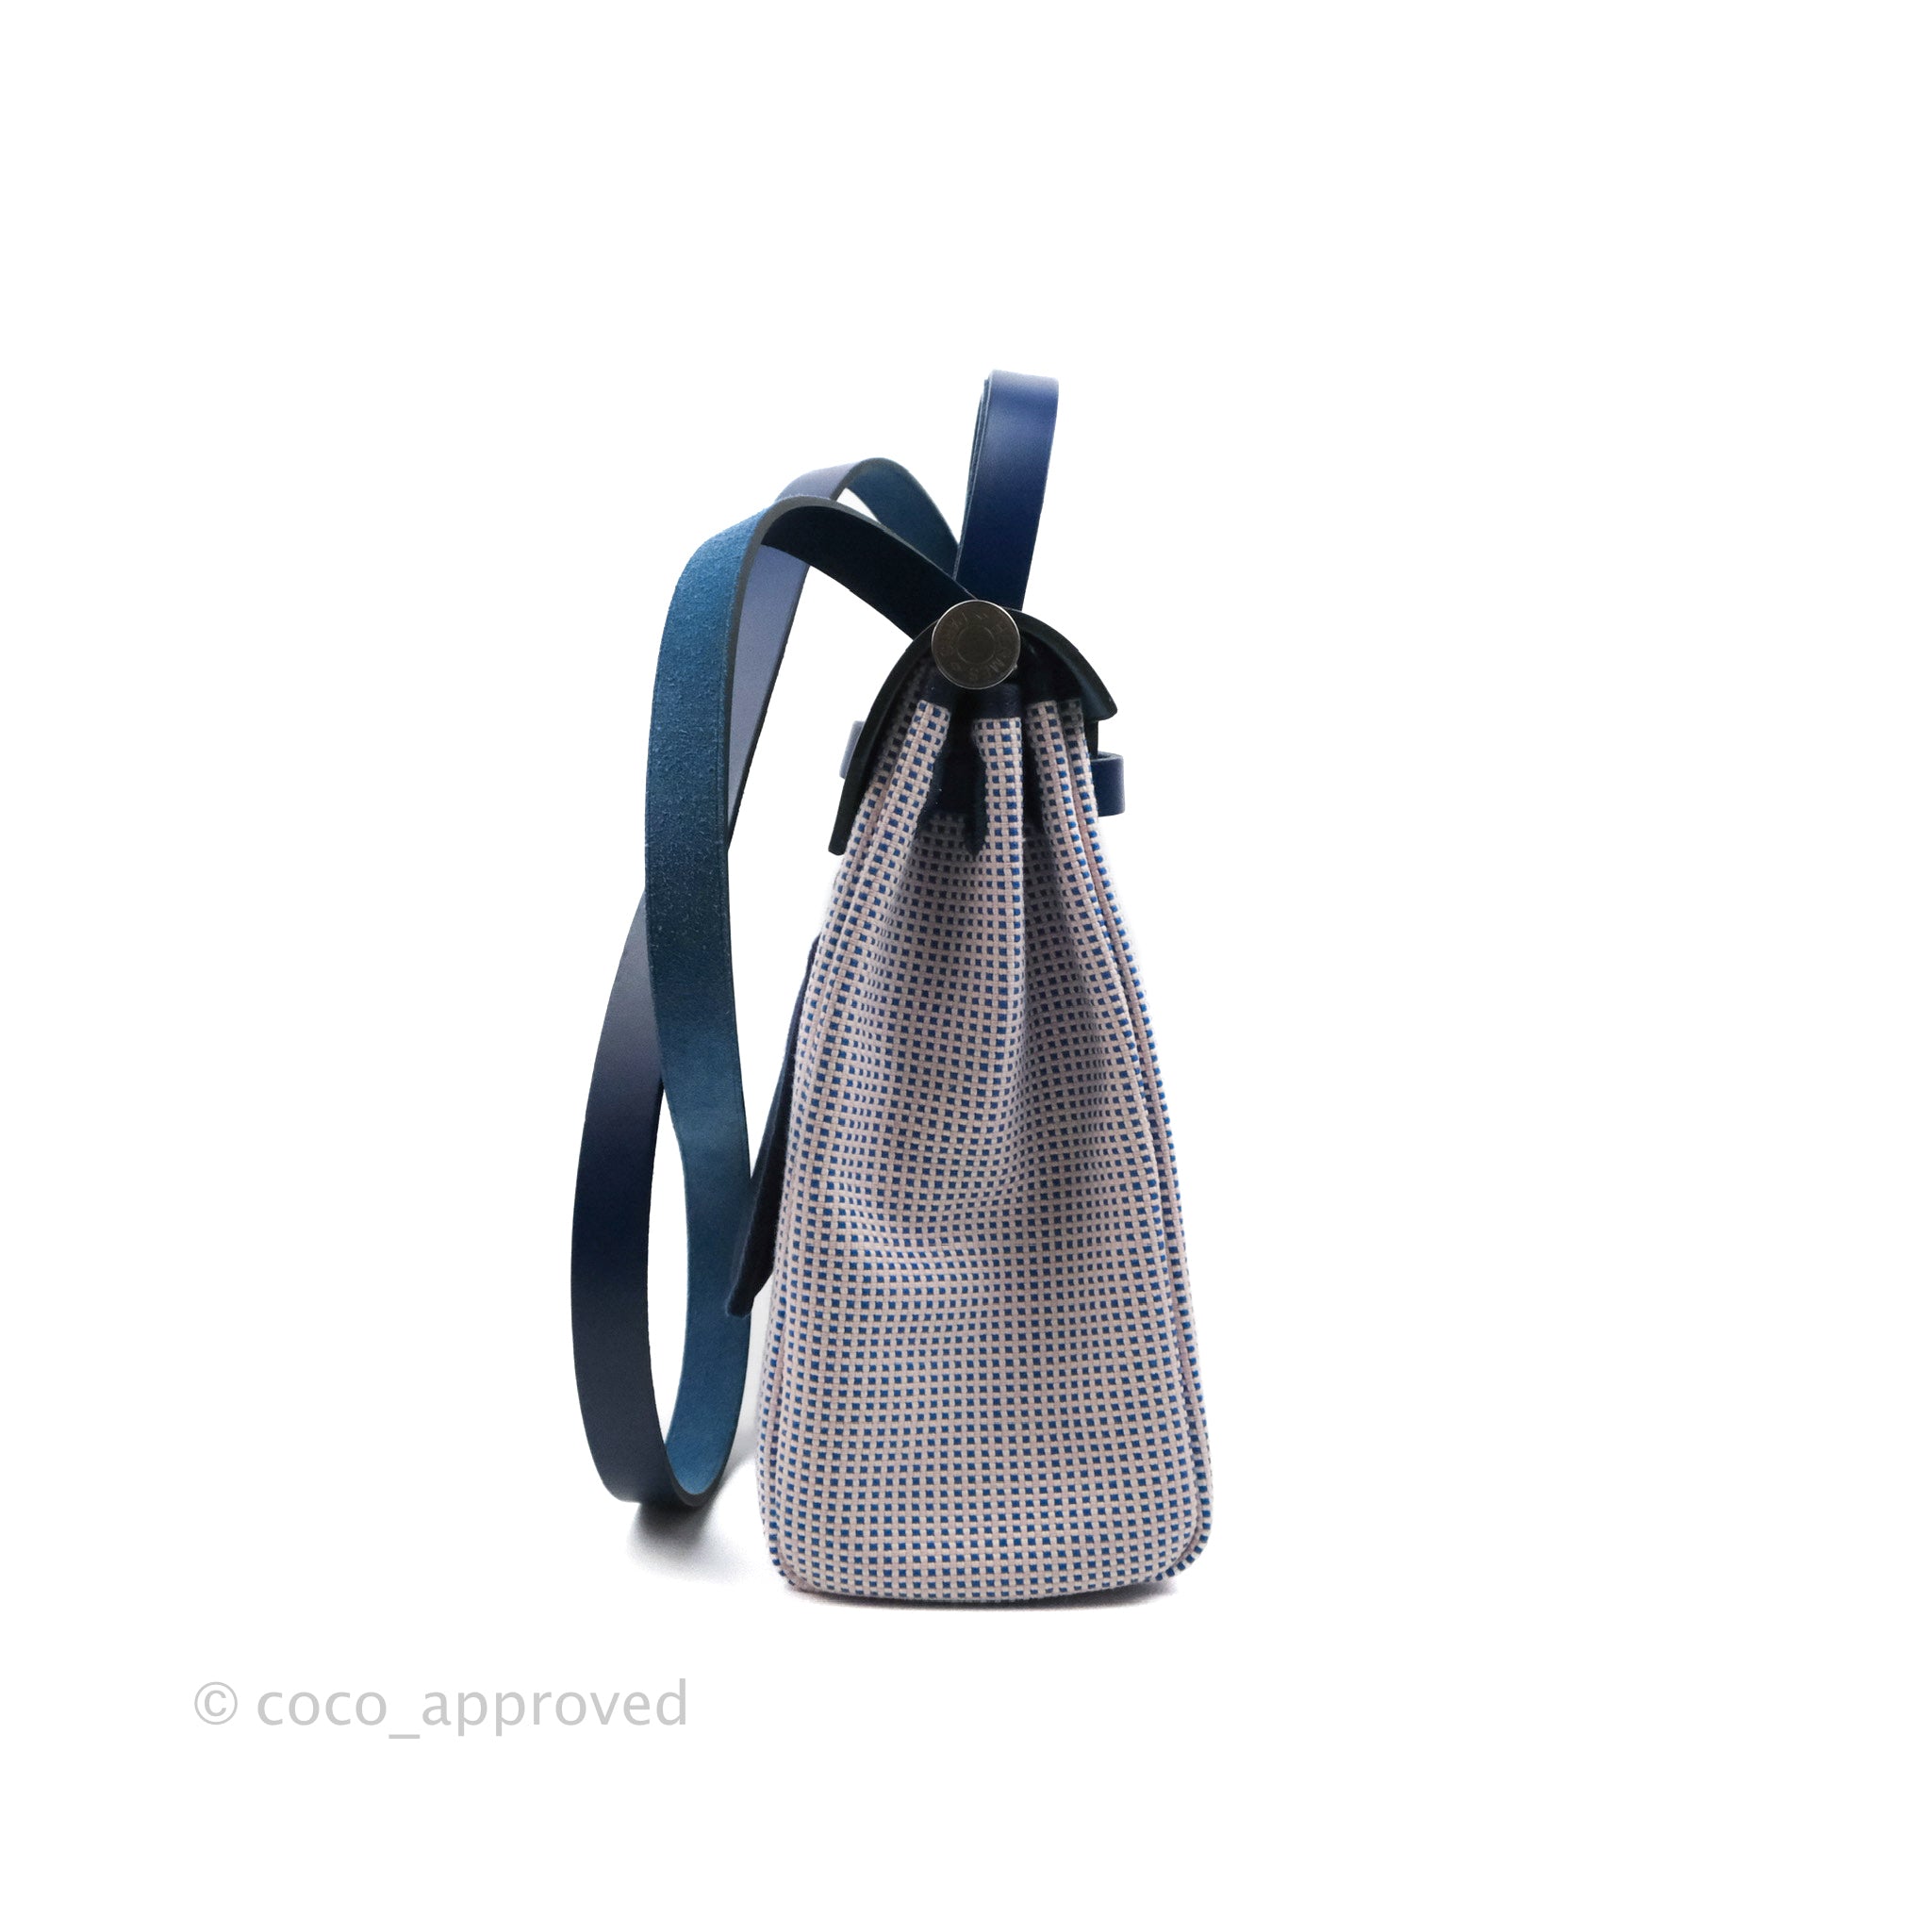 Hermès Herbag Zip 31 Bag Retourne Ecru / Noir – The Luxury Shopper